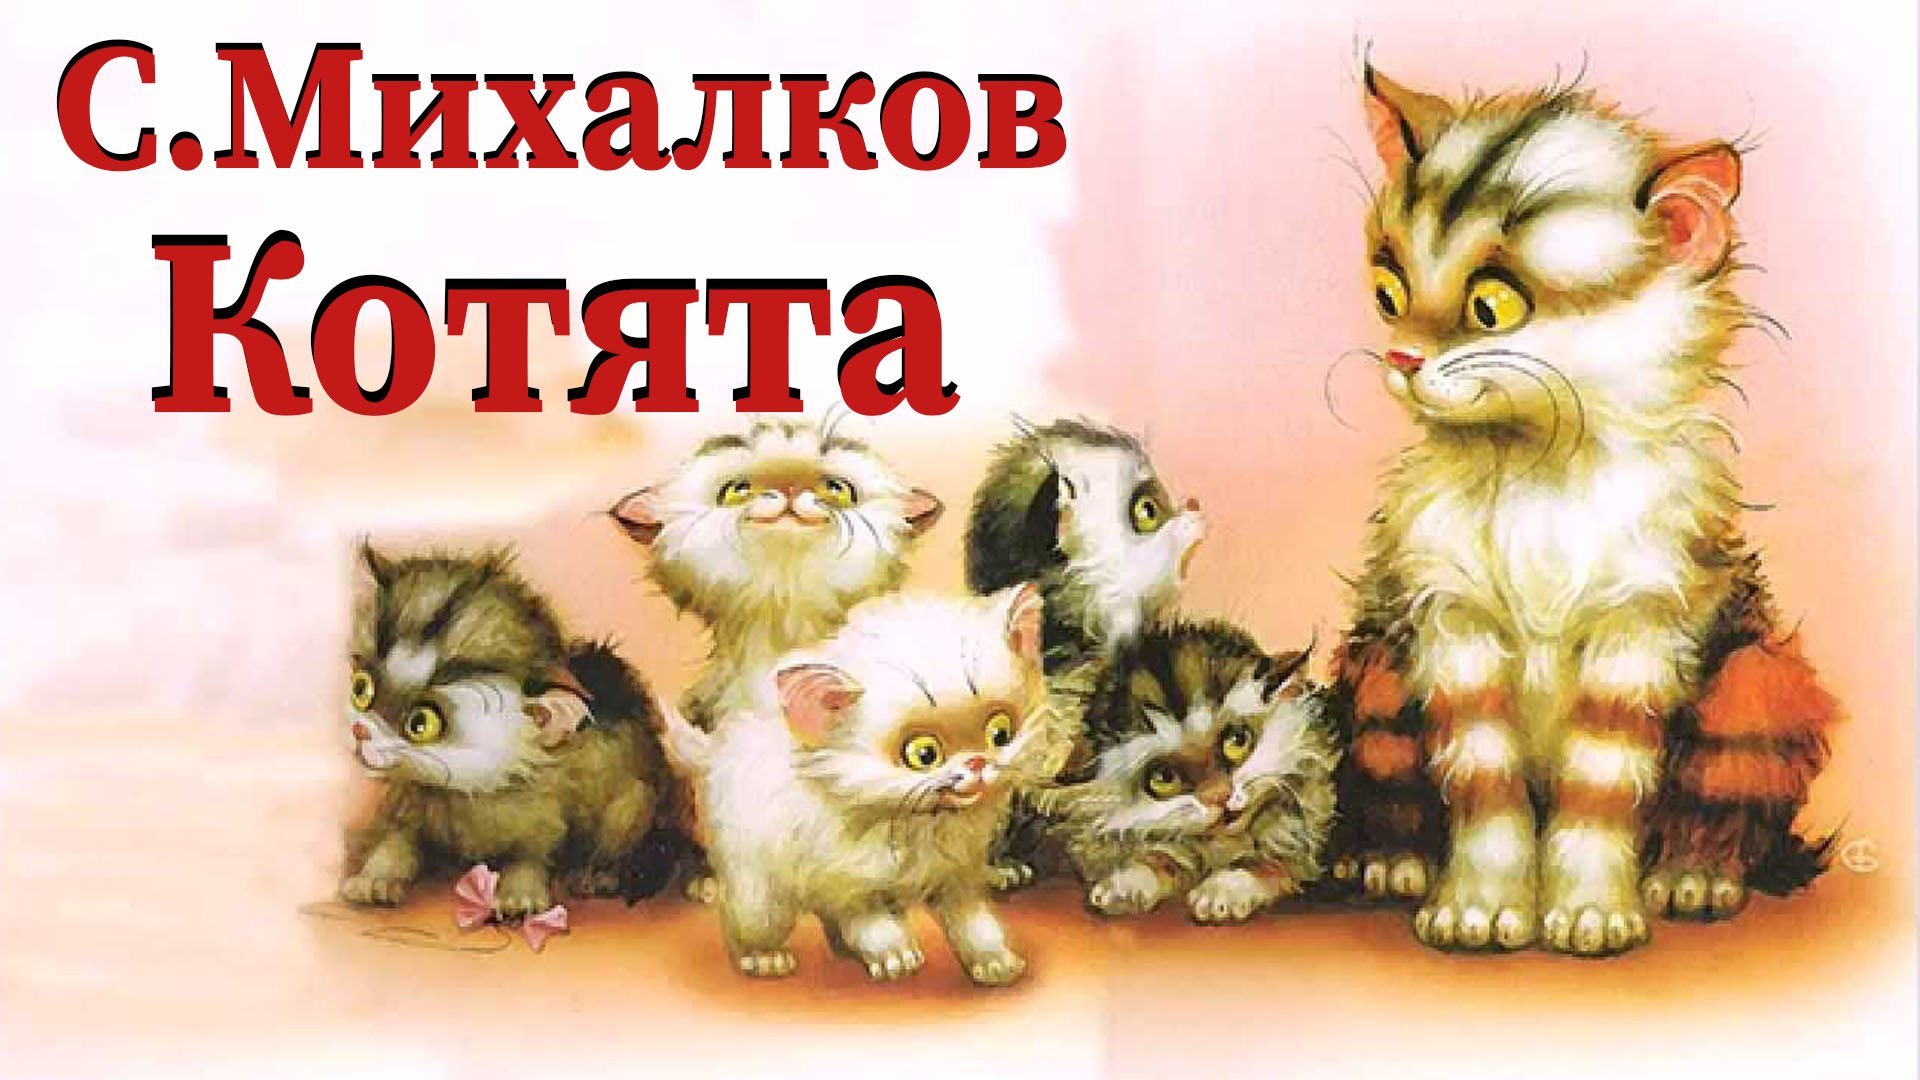 У маши живут 5 котят. Стихи Сергея Владимировича Михалкова котята.